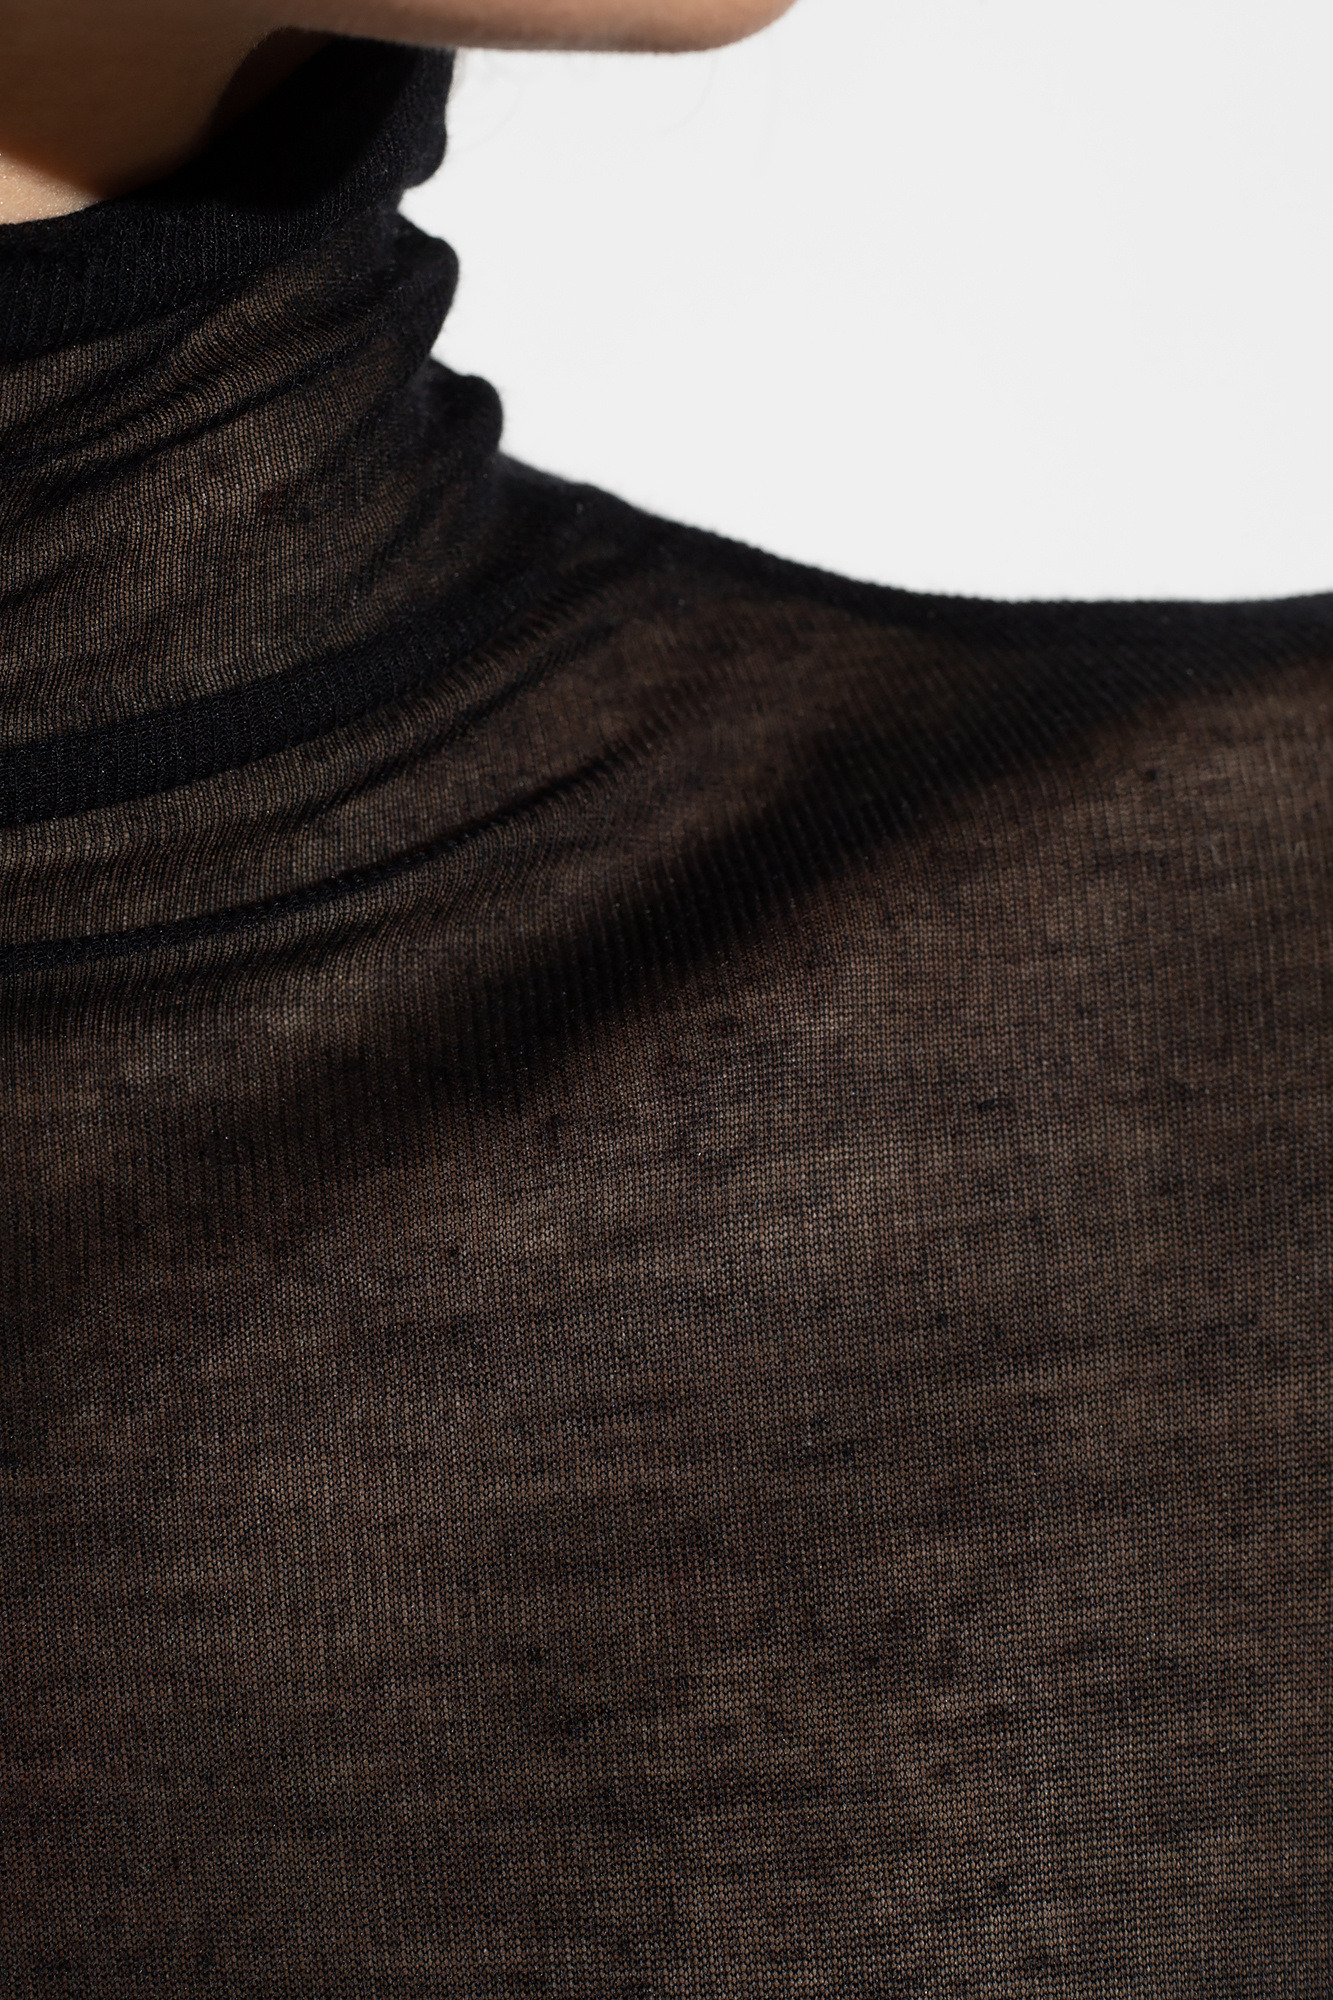 Ann Demeulemeester ‘Kaisu’ turtleneck sweater